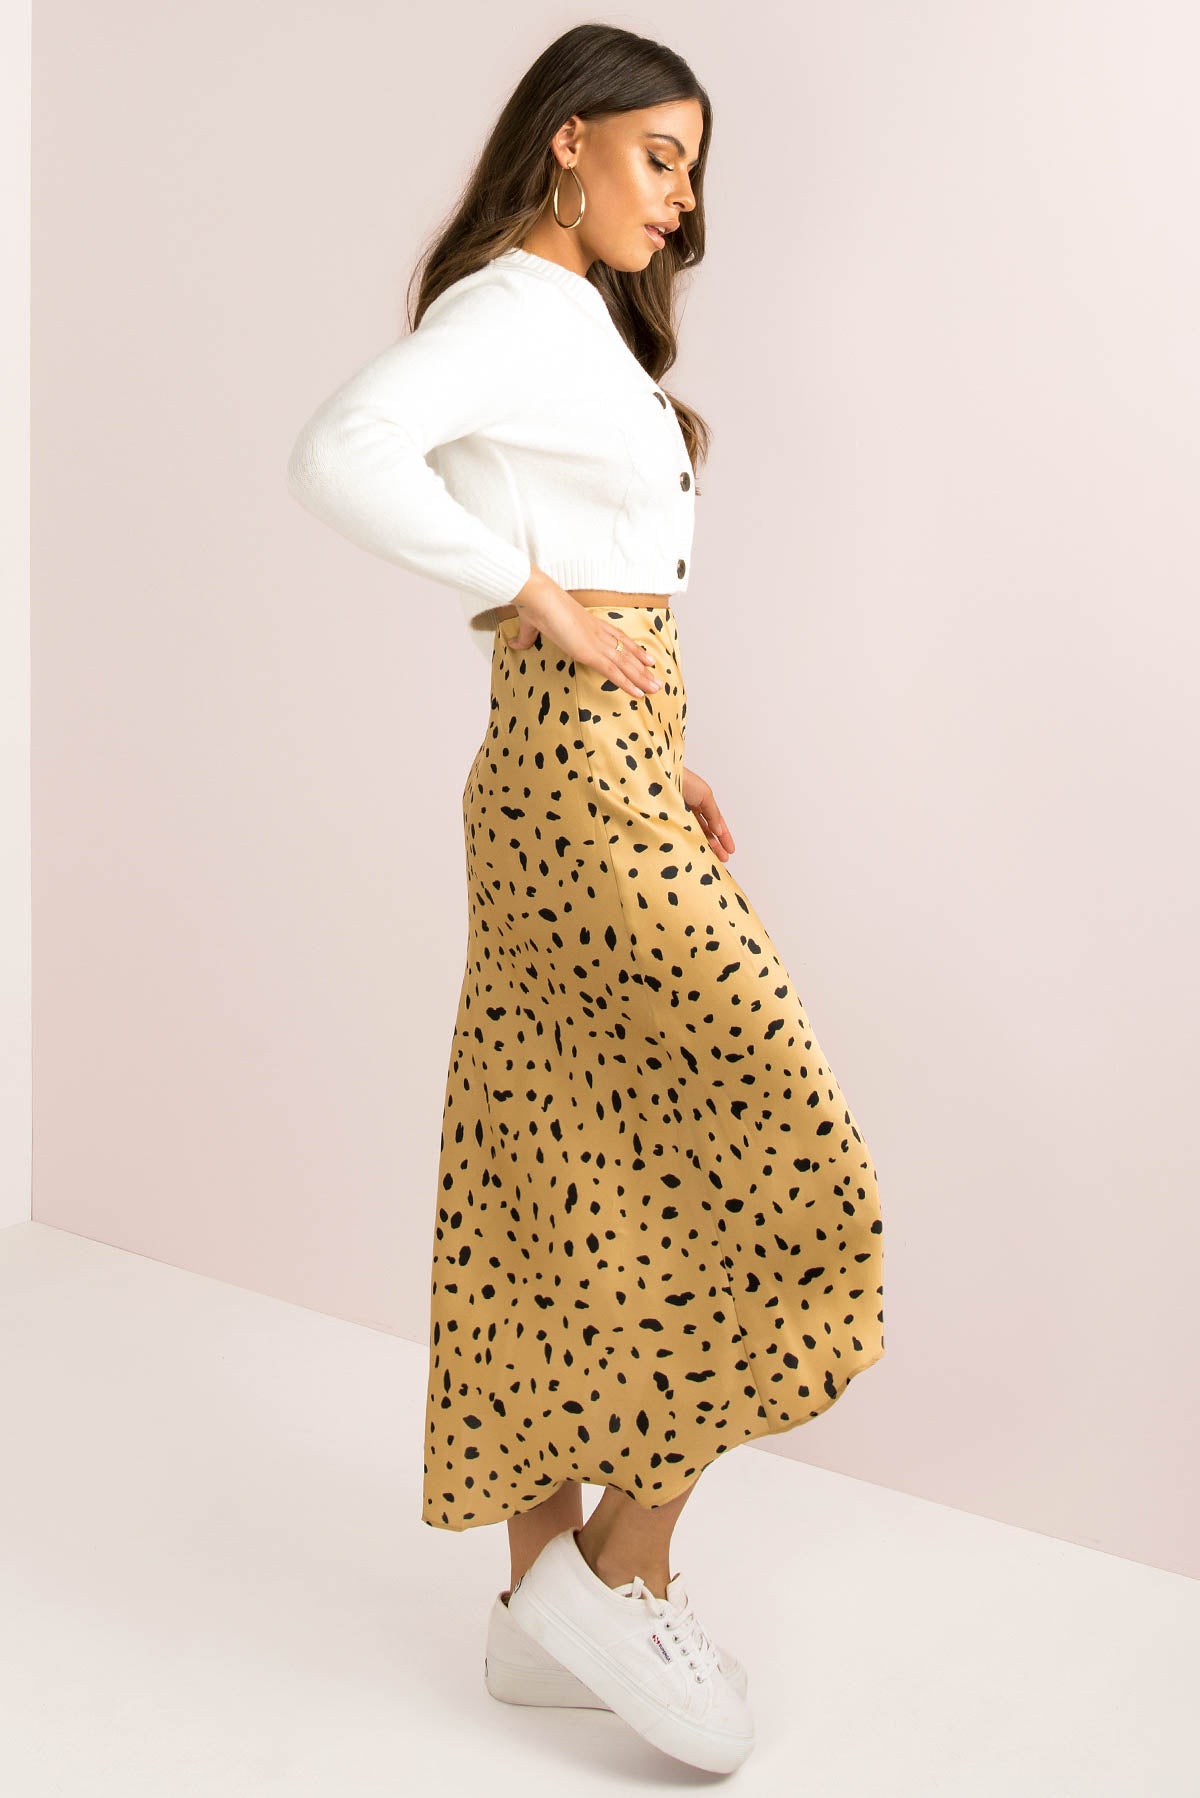 Regan Skirt / Leopard